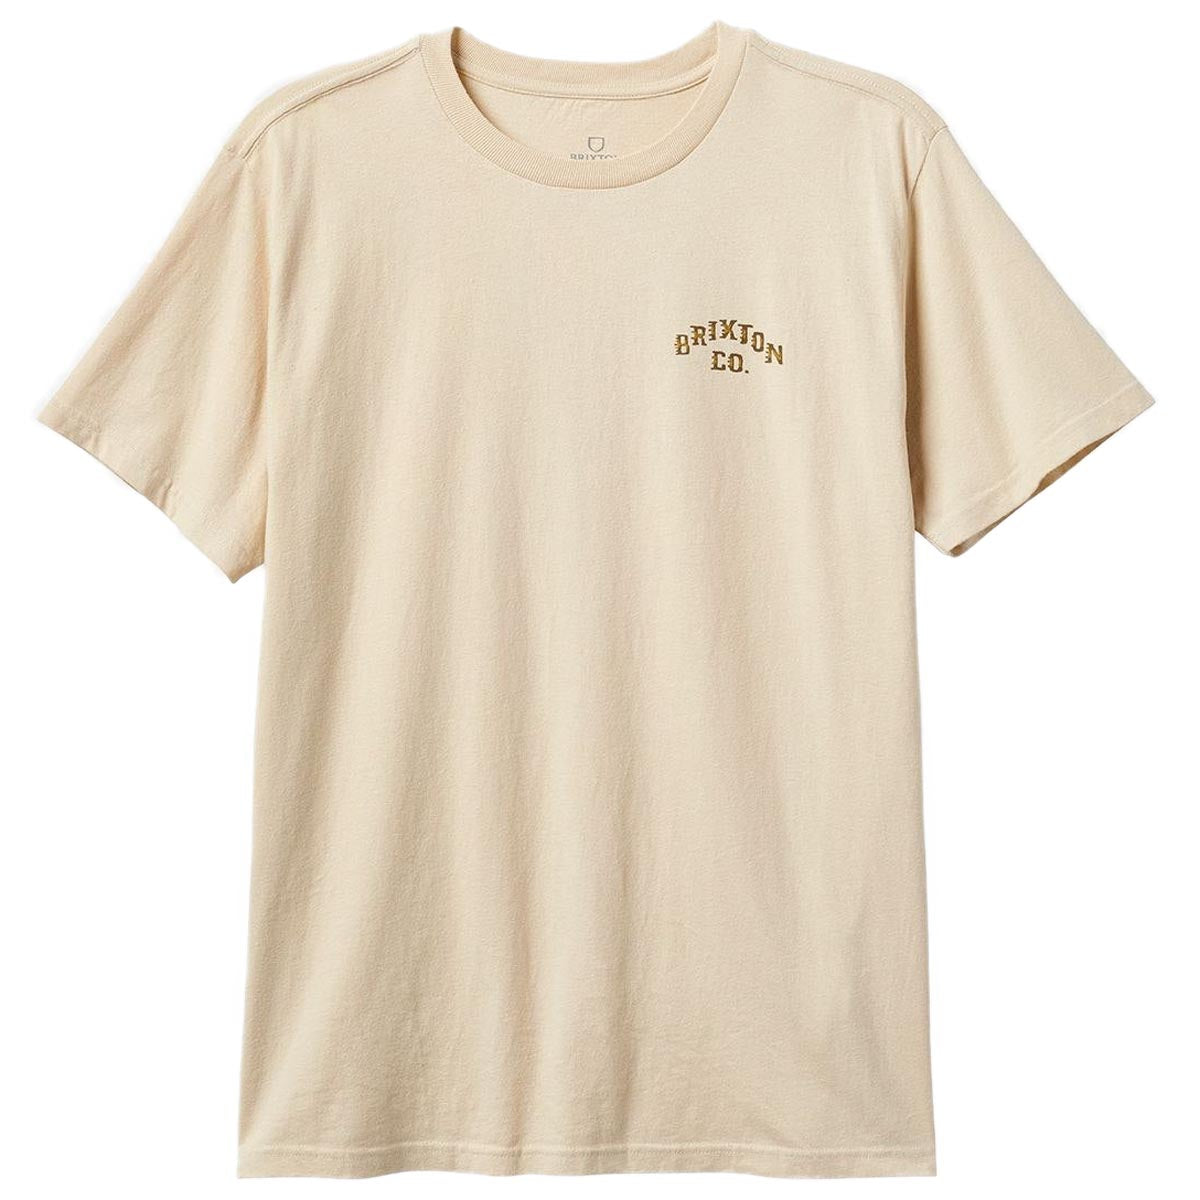 Brixton Homer T-Shirt - Cream Classic Wash image 2